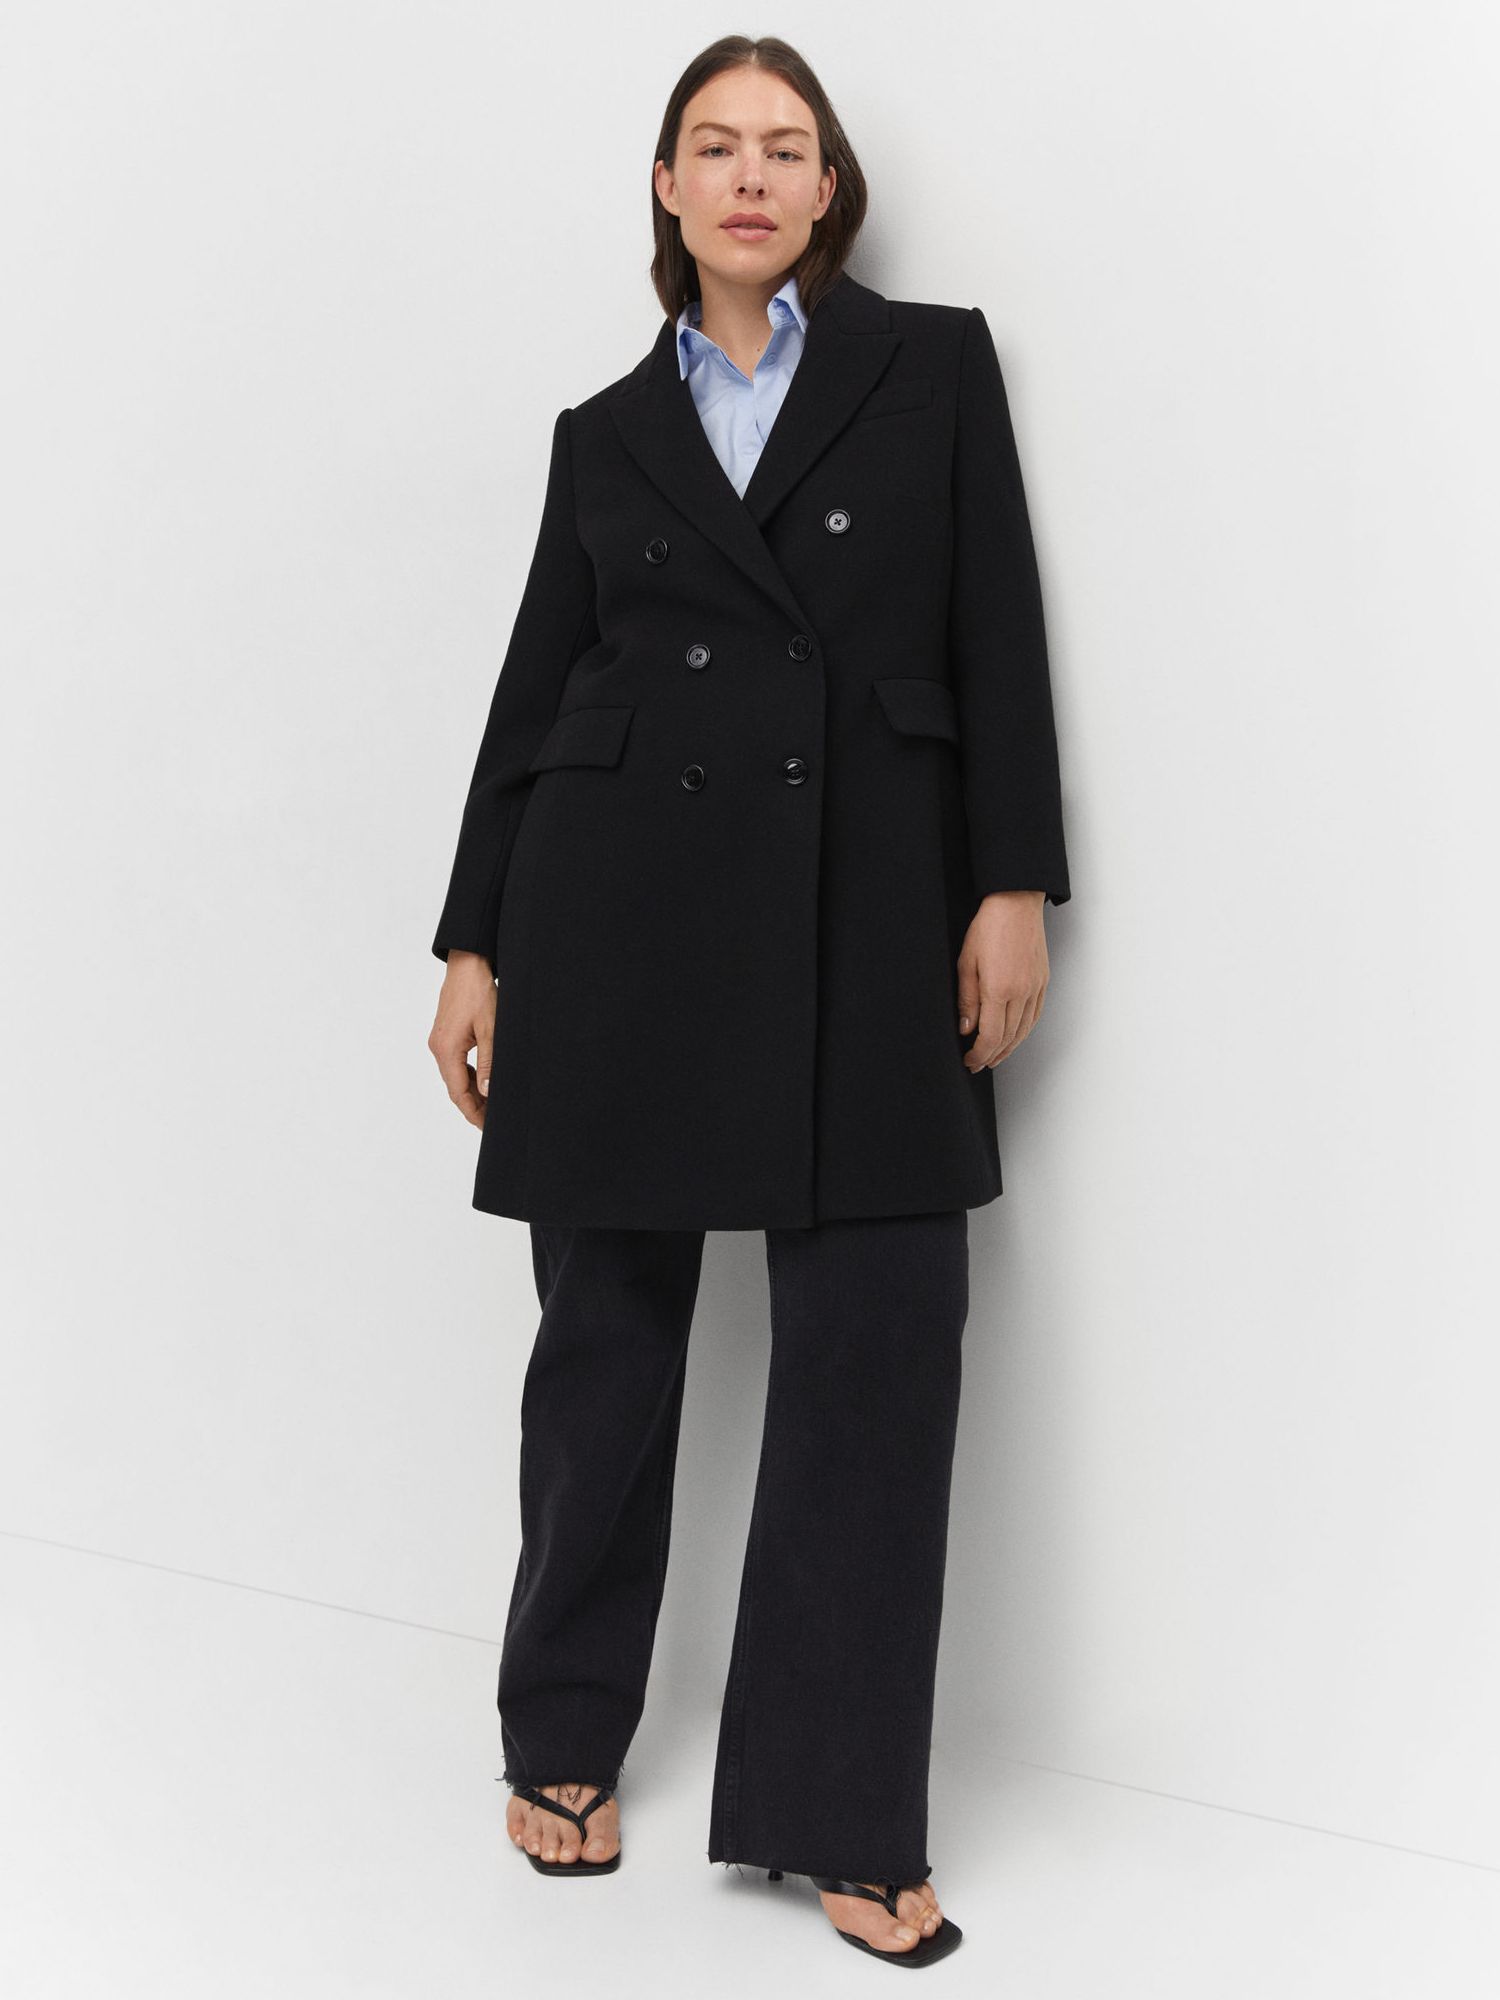 Mango Dali Wool Blend Coat, Black at John Lewis & Partners